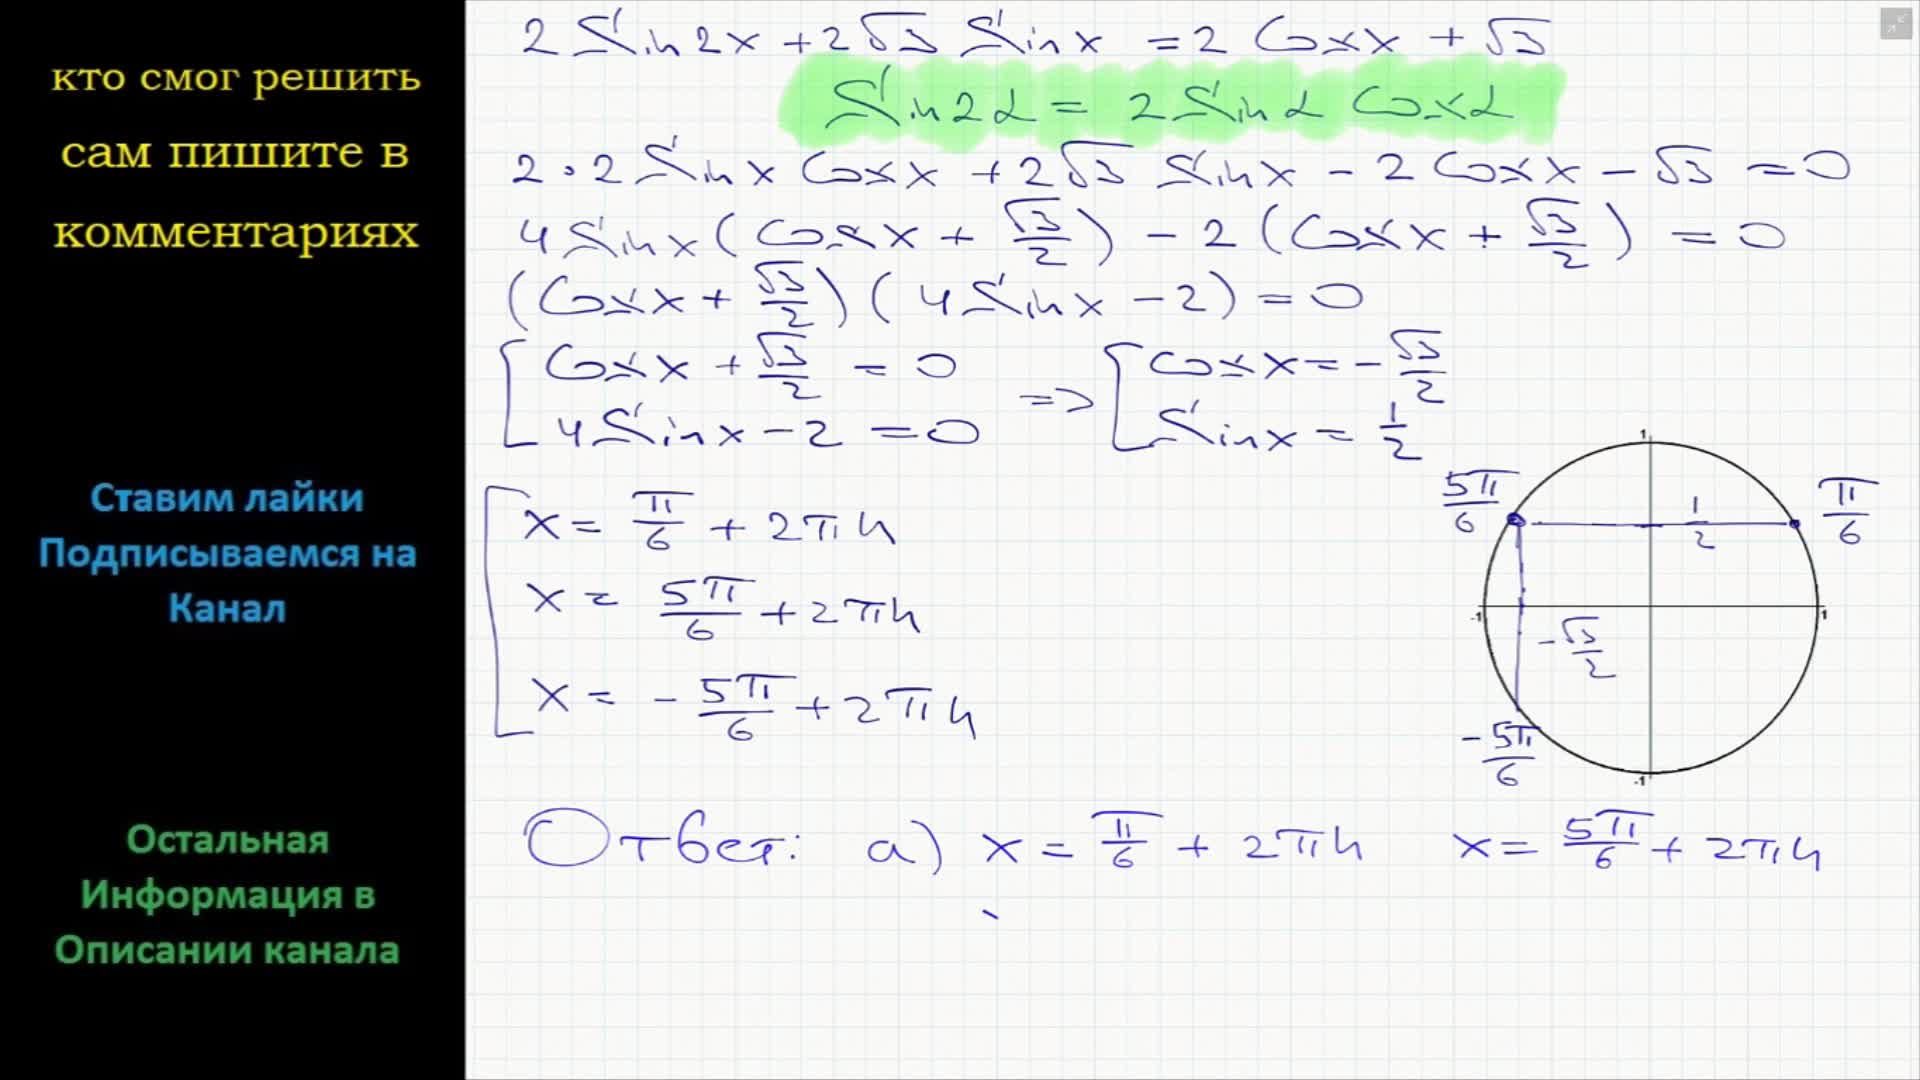 2sinx 1 0 уравнение. Log2 2 sinx log2 sinx /2cosx-корень 3. Log sinx = 2. 2log2 0.5 2sinx +7log0.5. 2log2 0.5 2sinx +7log0.5 2sinx +3.